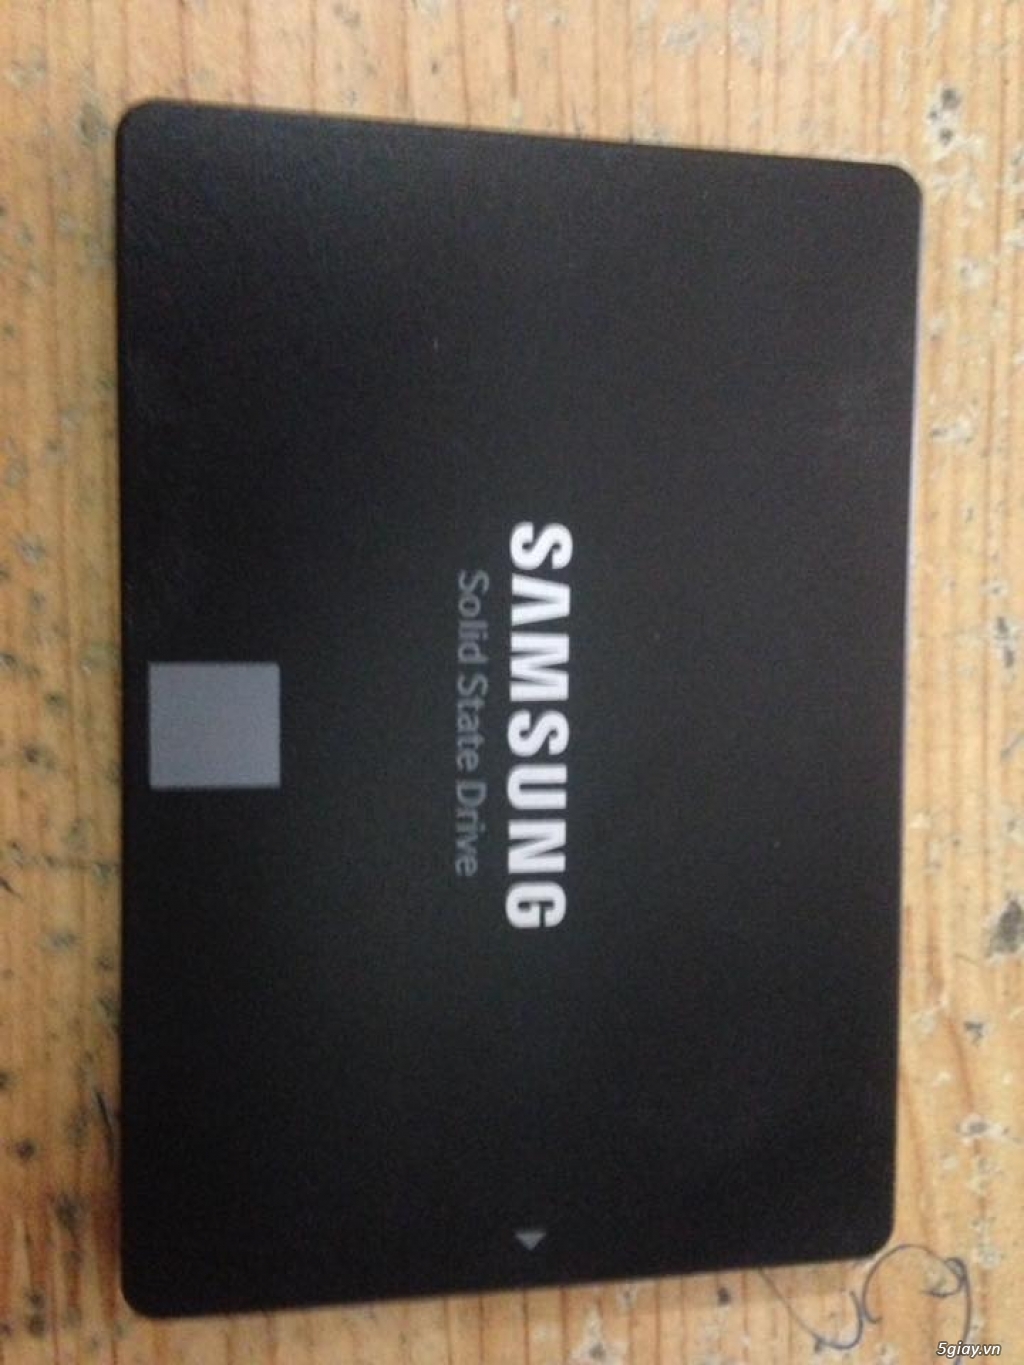 Bán cặp ram DDR4 8G Kingston ECC và 1 SSD Samsung 500G Evo 850 SataIII